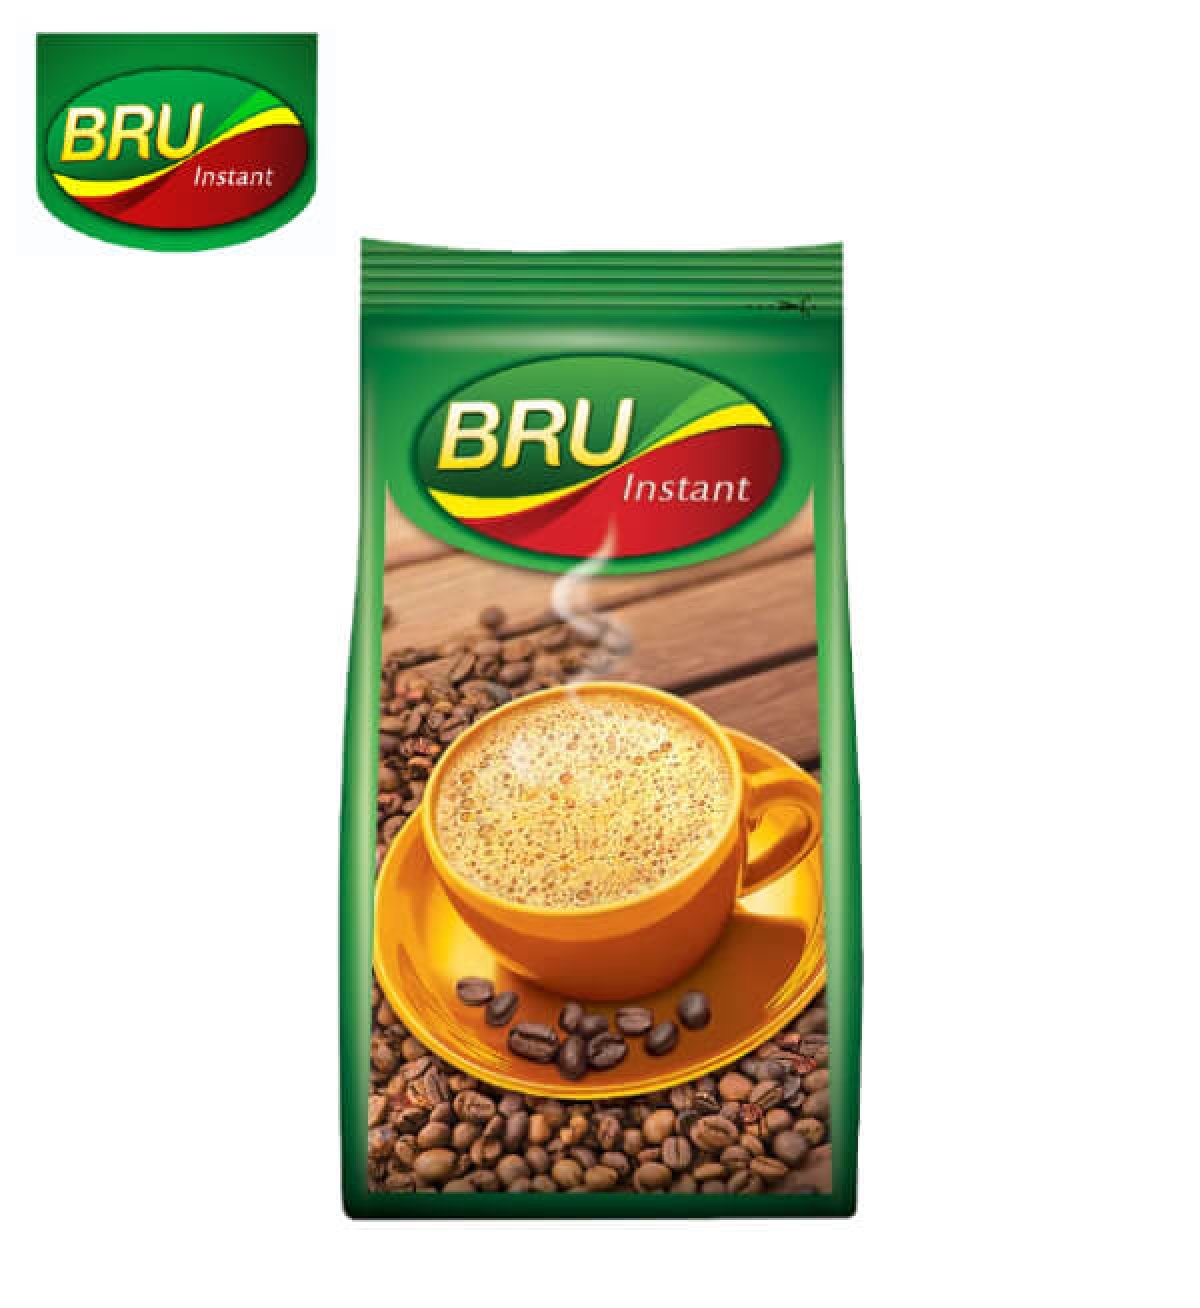 SWOT analysis of Bru Coffee - Bru Coffee SWOT analysis